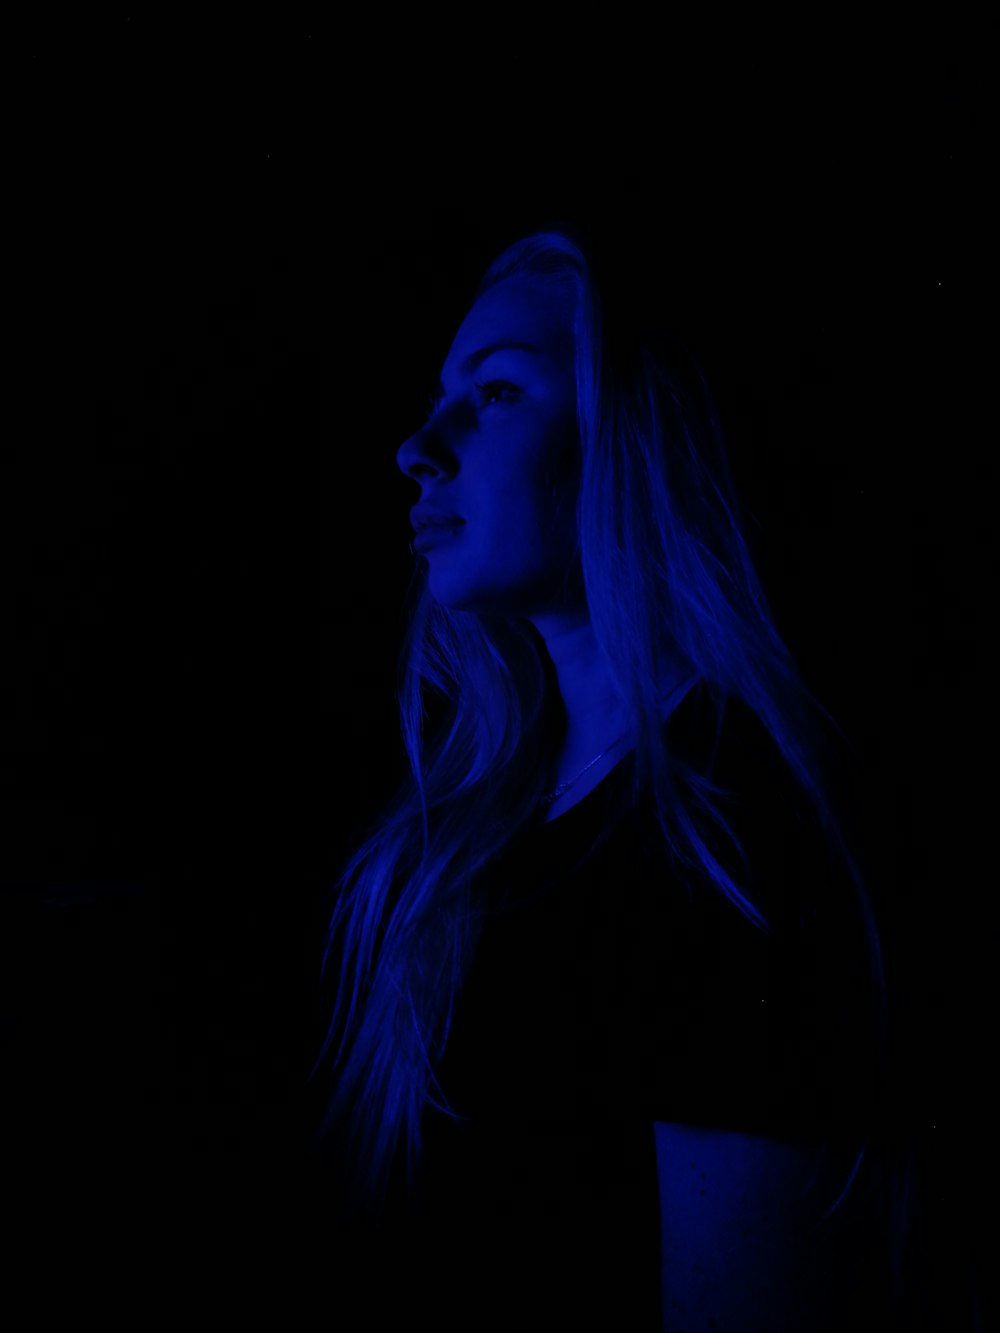 Mujer con camiseta iluminada con luz azul